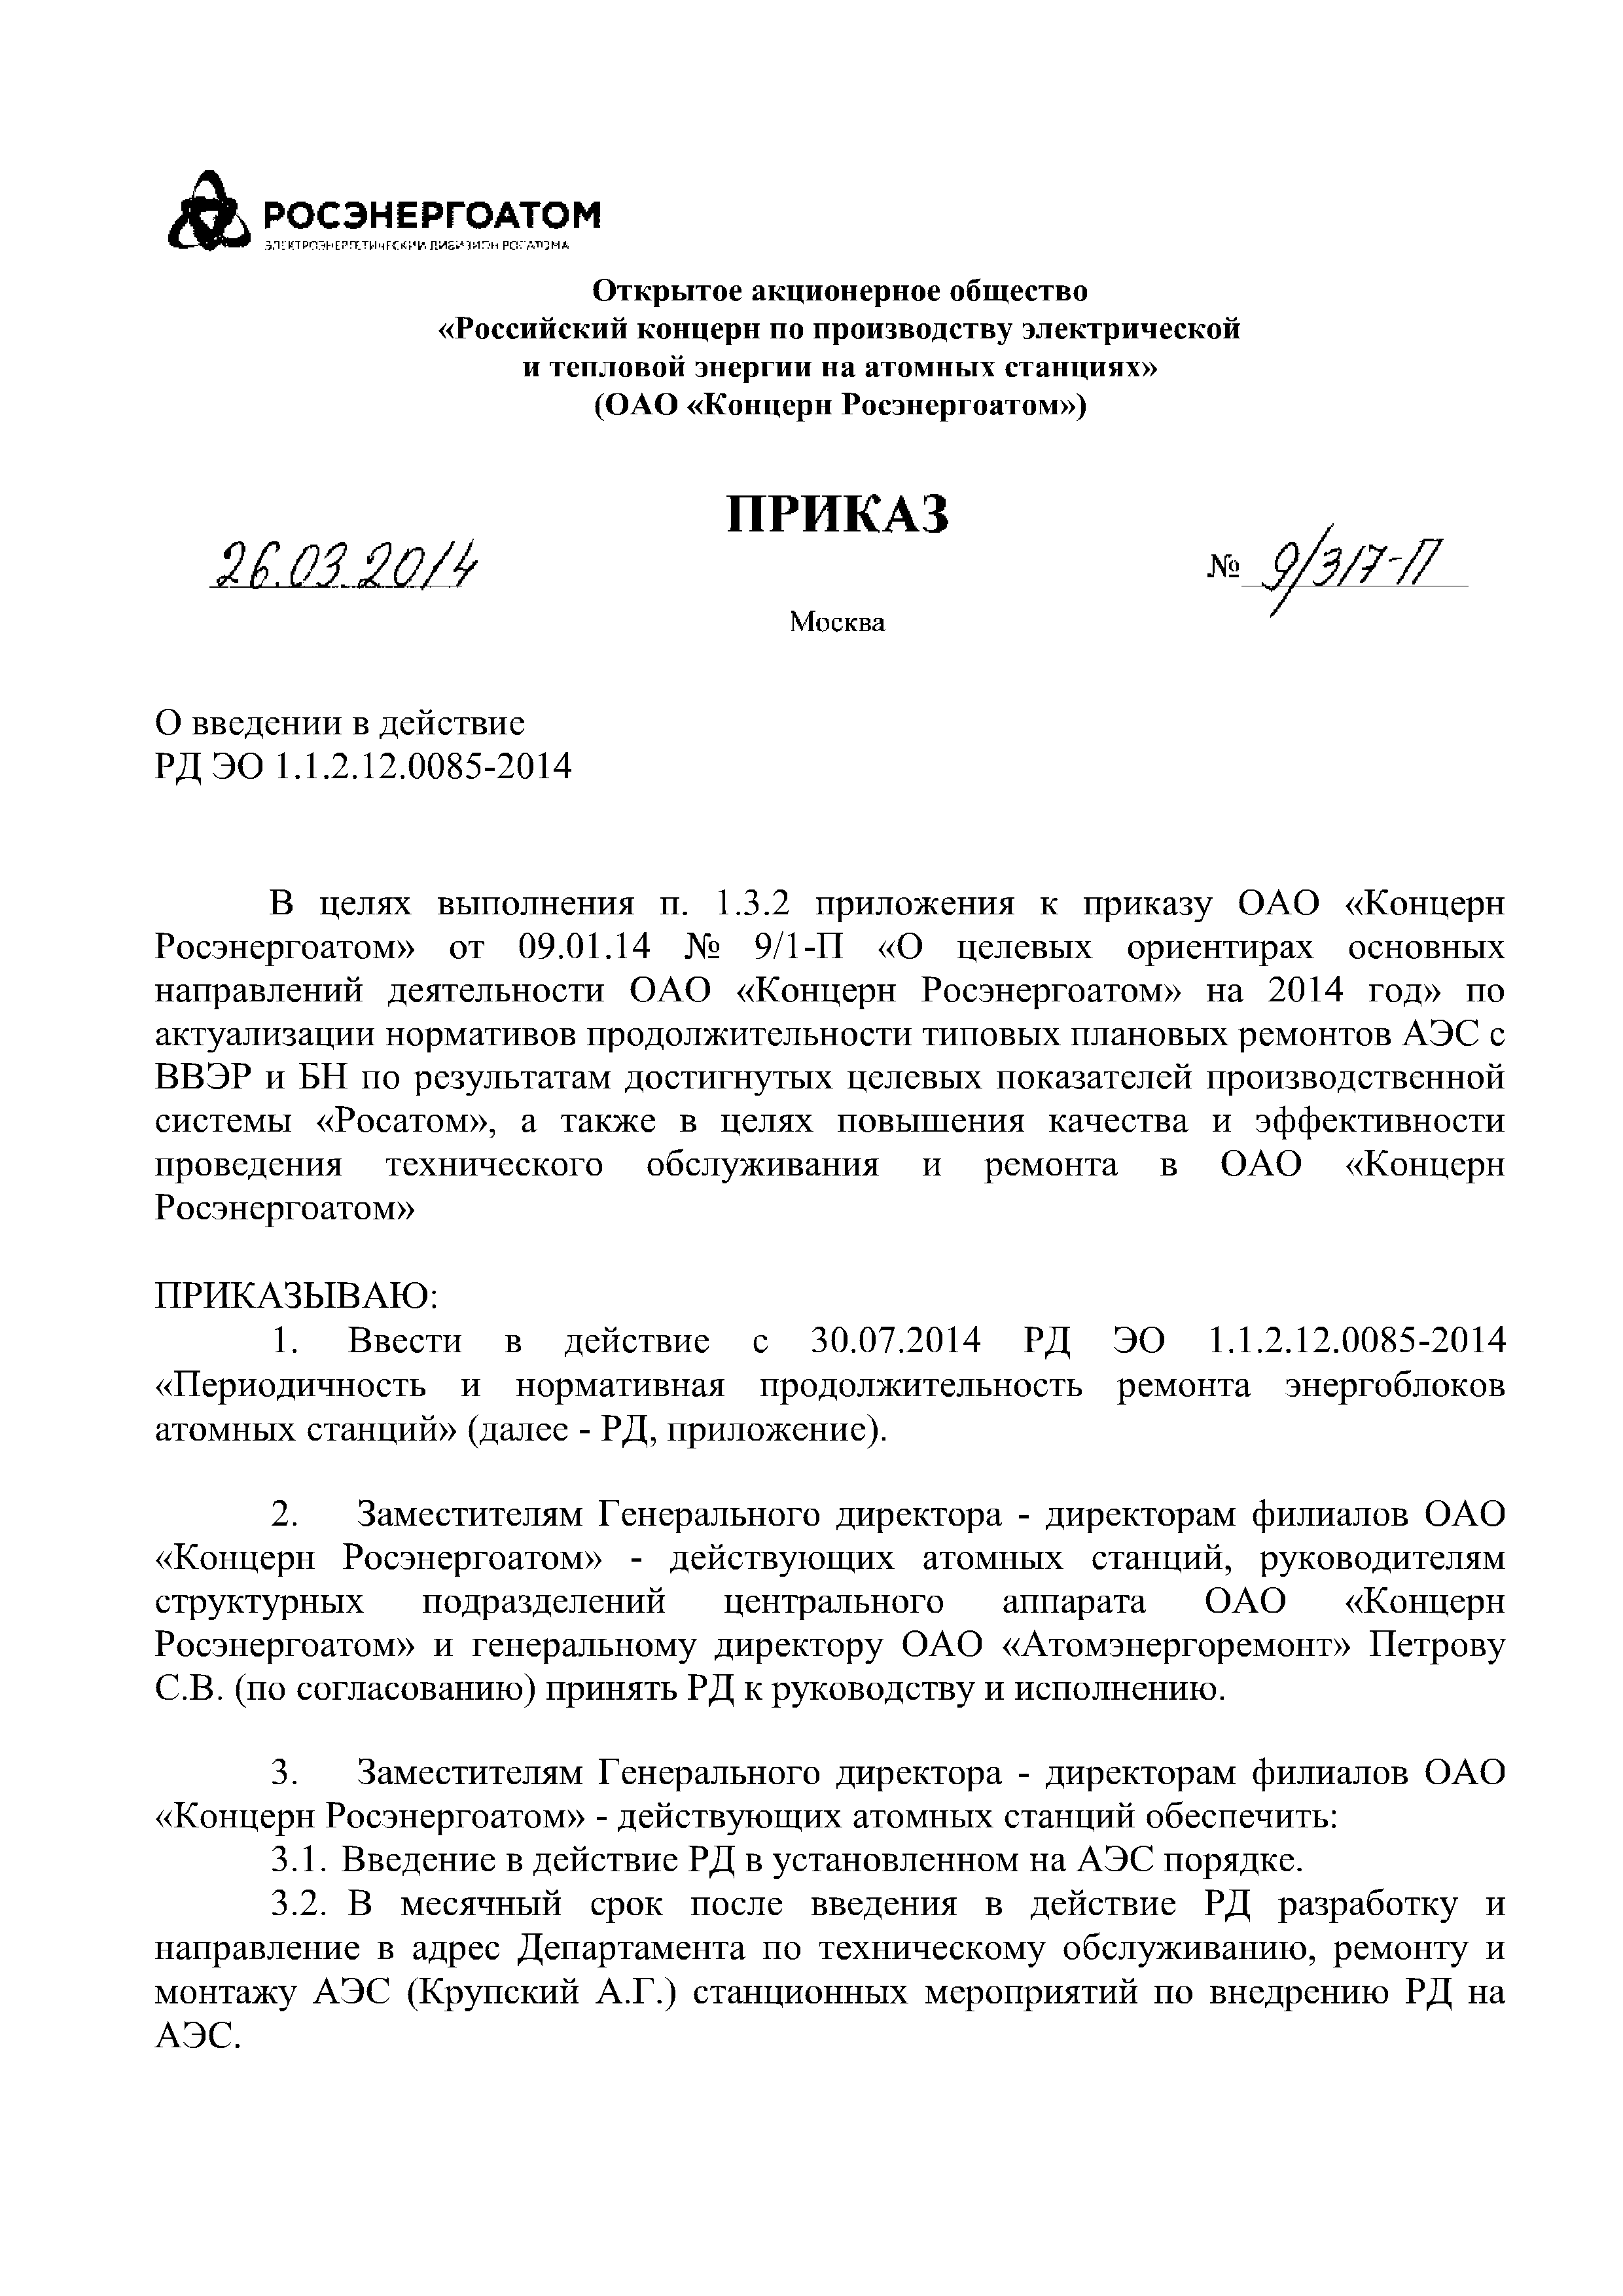 РД ЭО 1.1.2.12.0085-2014